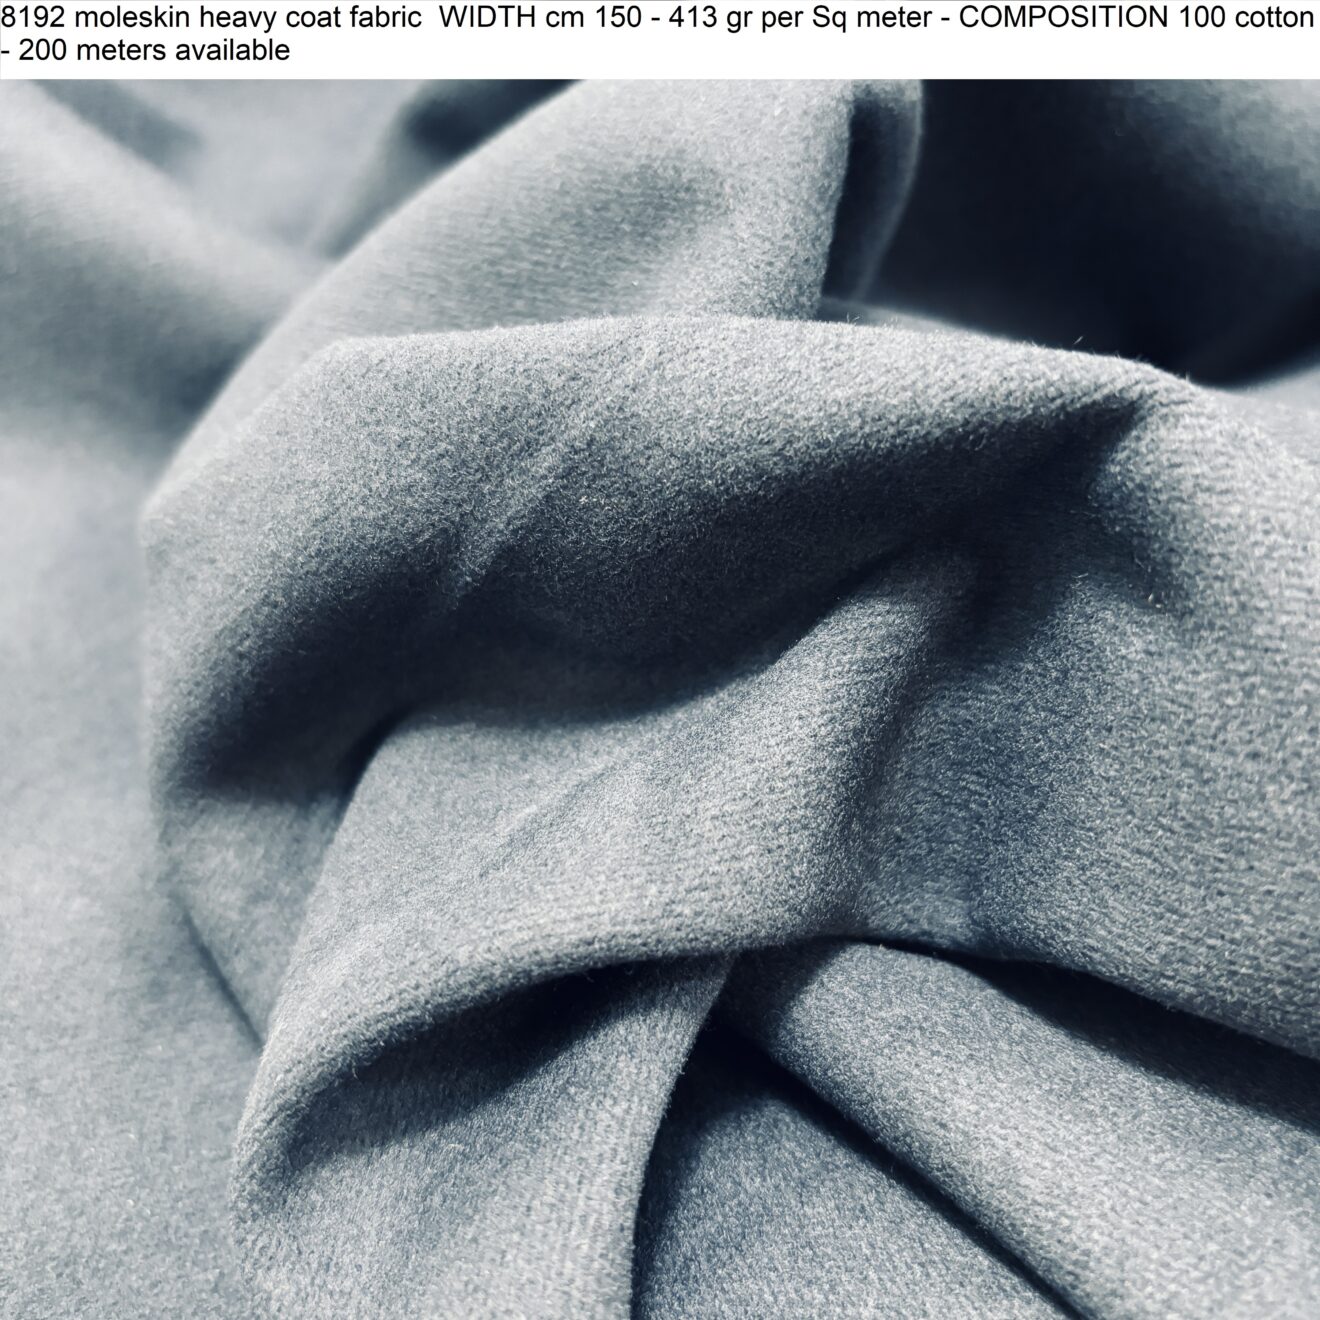 8192 moleskin heavy coat fabric WIDTH cm 150 - 413 gr per Sq meter - COMPOSITION 100 cotton - 200 meters available